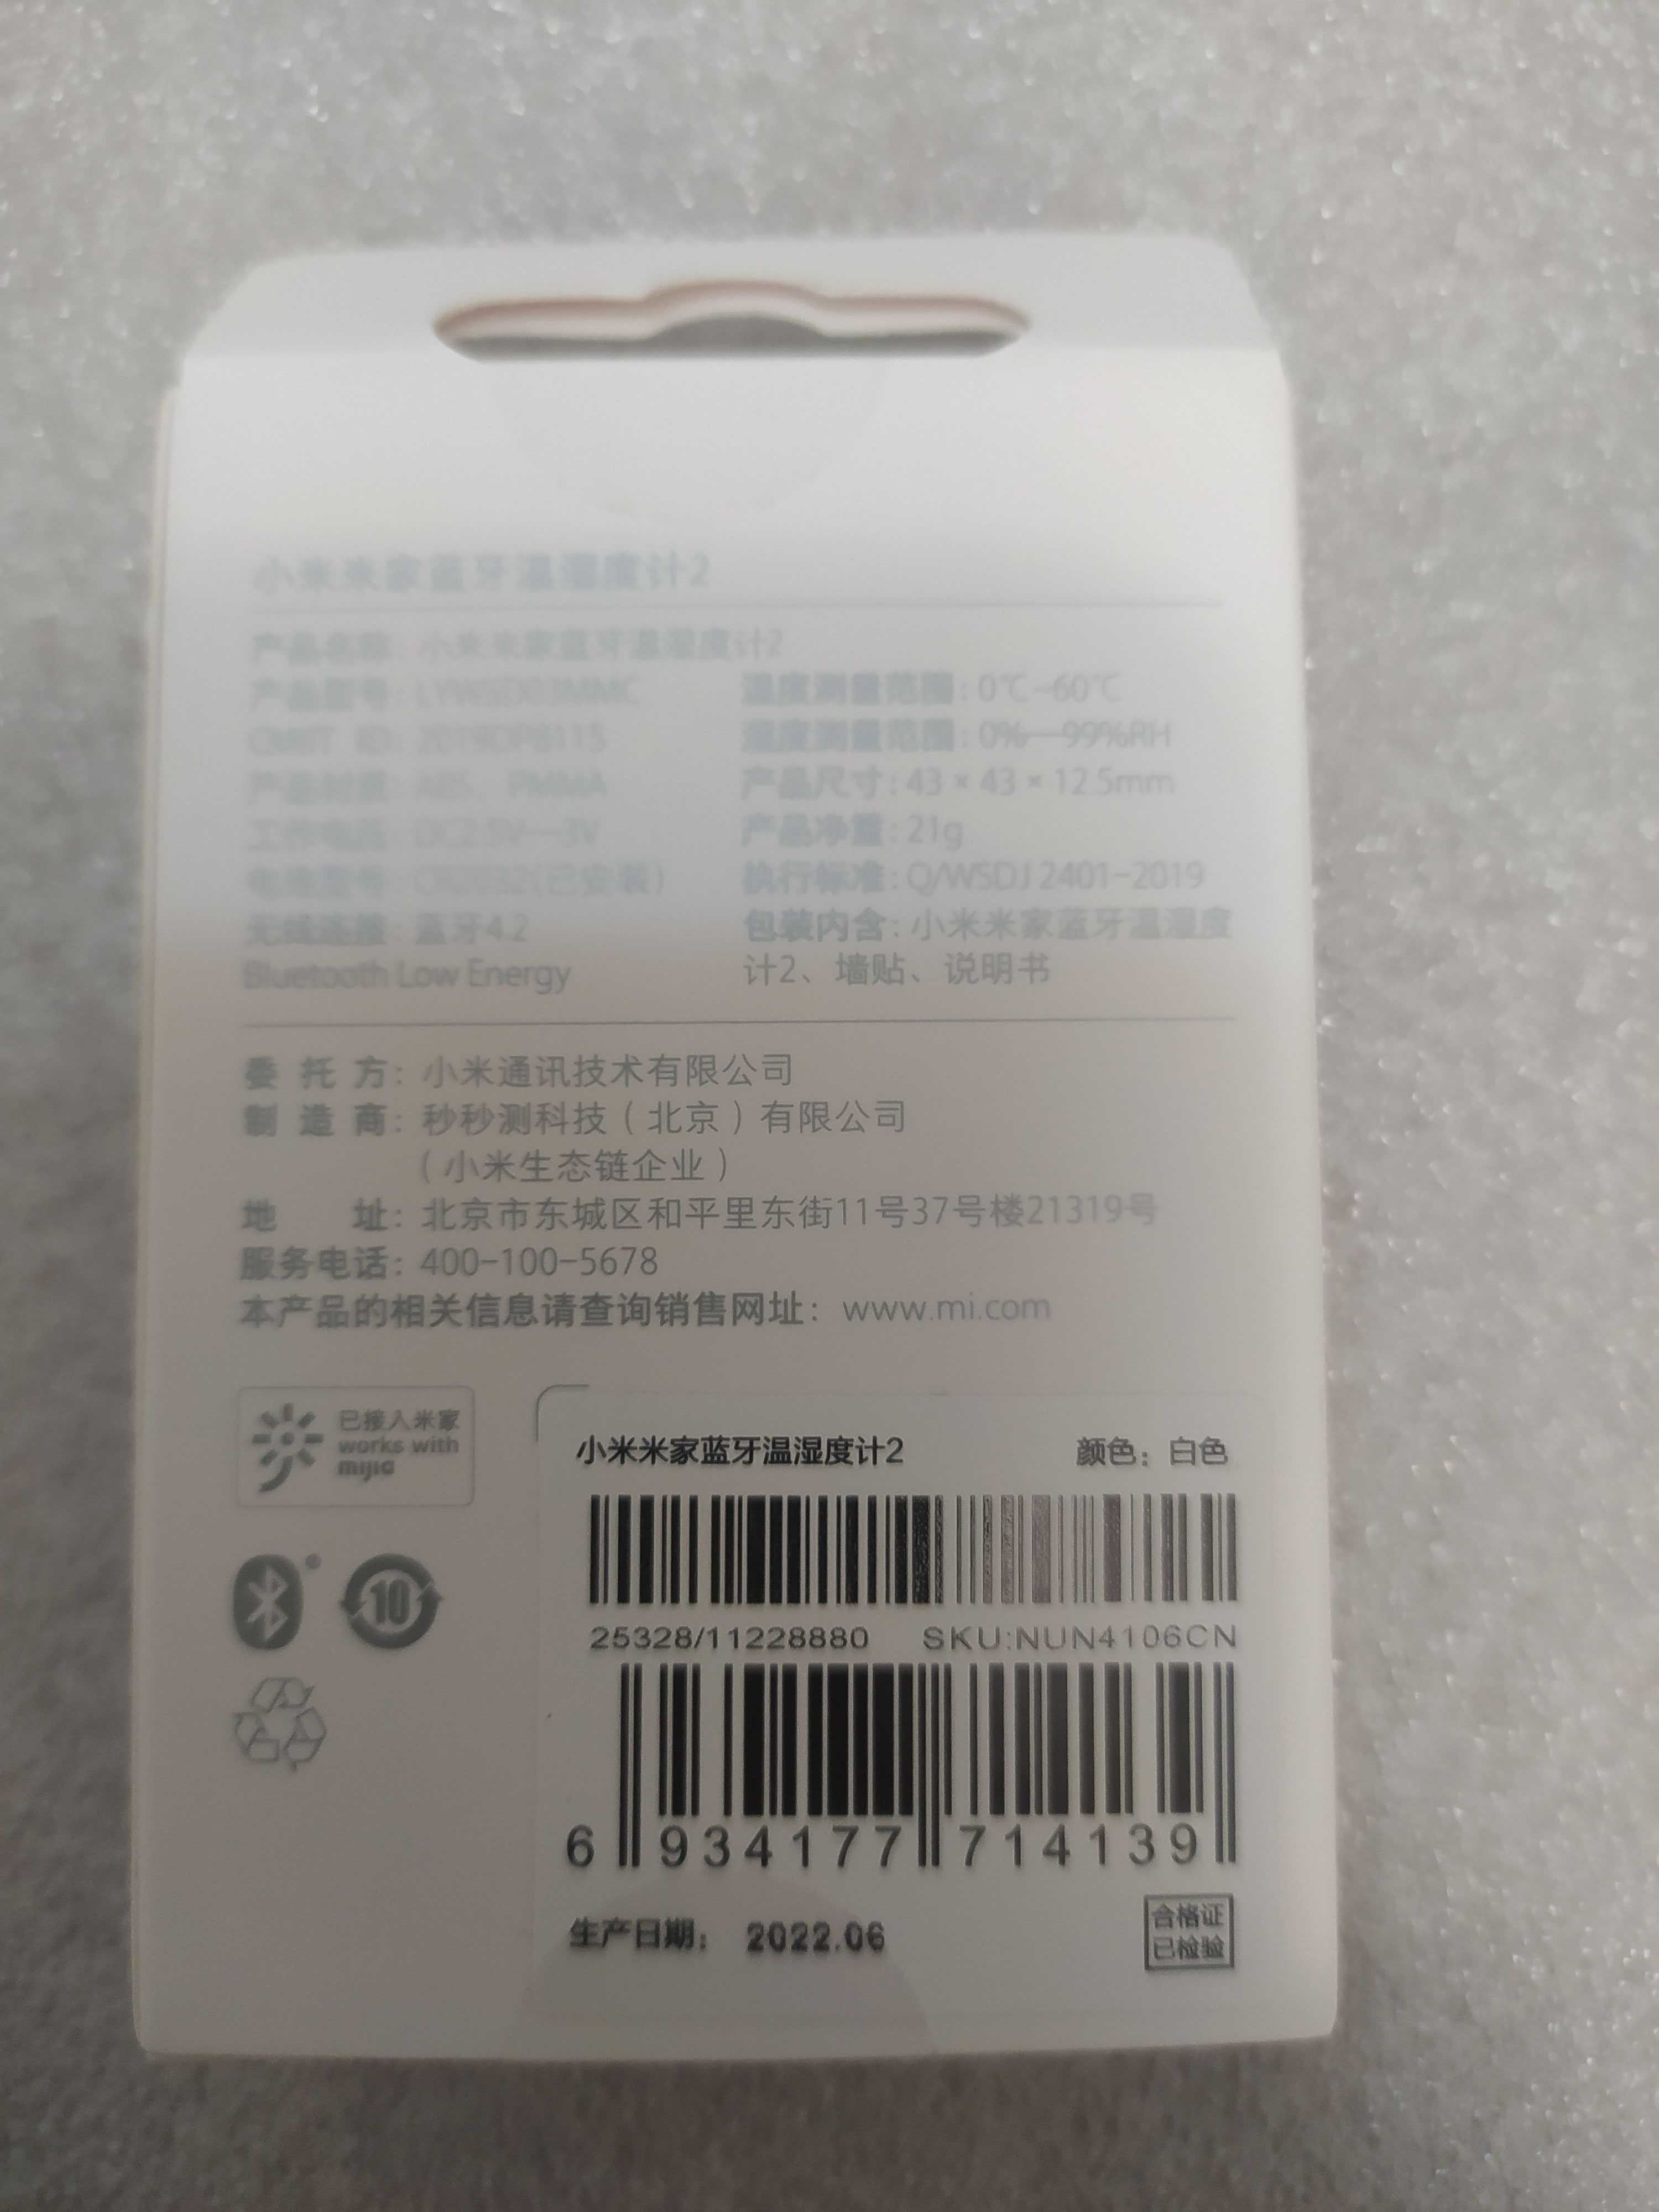 Xiaomi Mijia LYWSD03MMC Bluetooth Thermometer2 Термометр/гигрометр